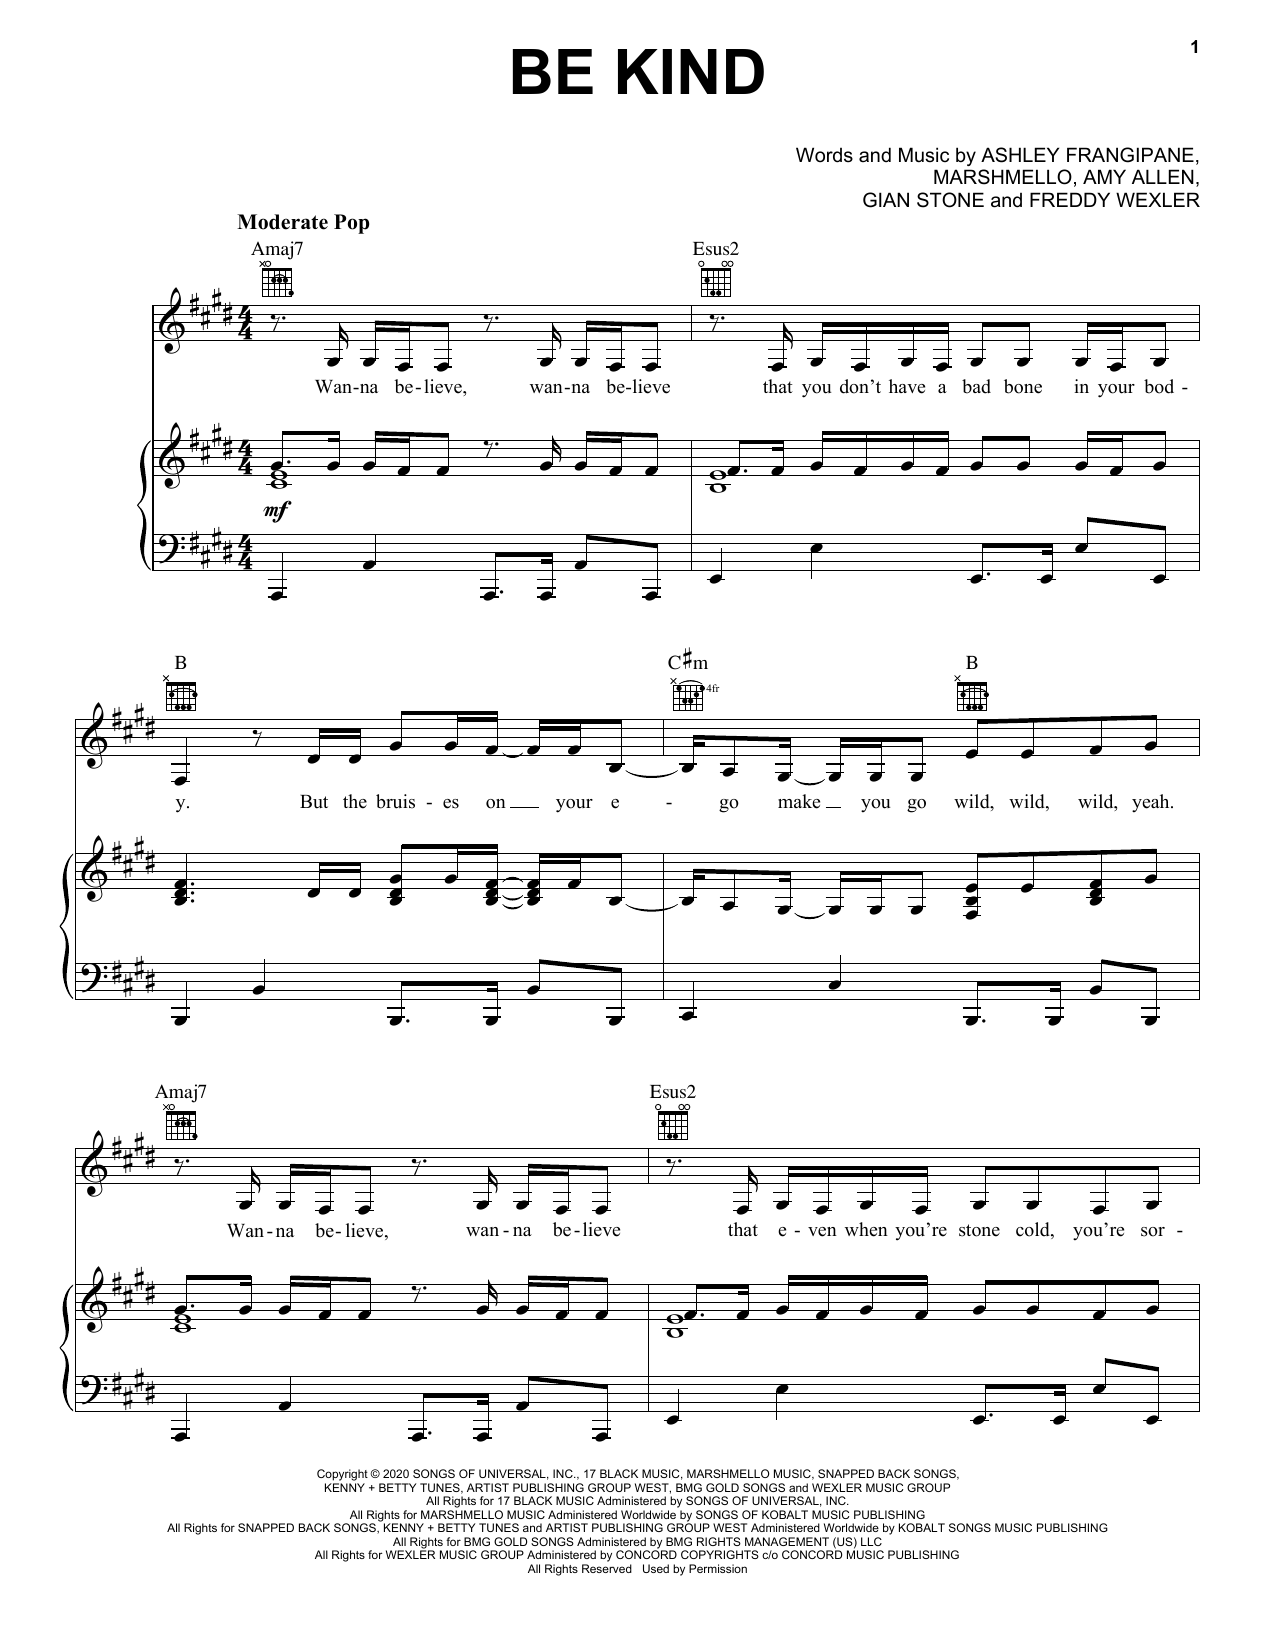 Marshmello & Halsey Be Kind Sheet Music Notes & Chords for Ukulele - Download or Print PDF